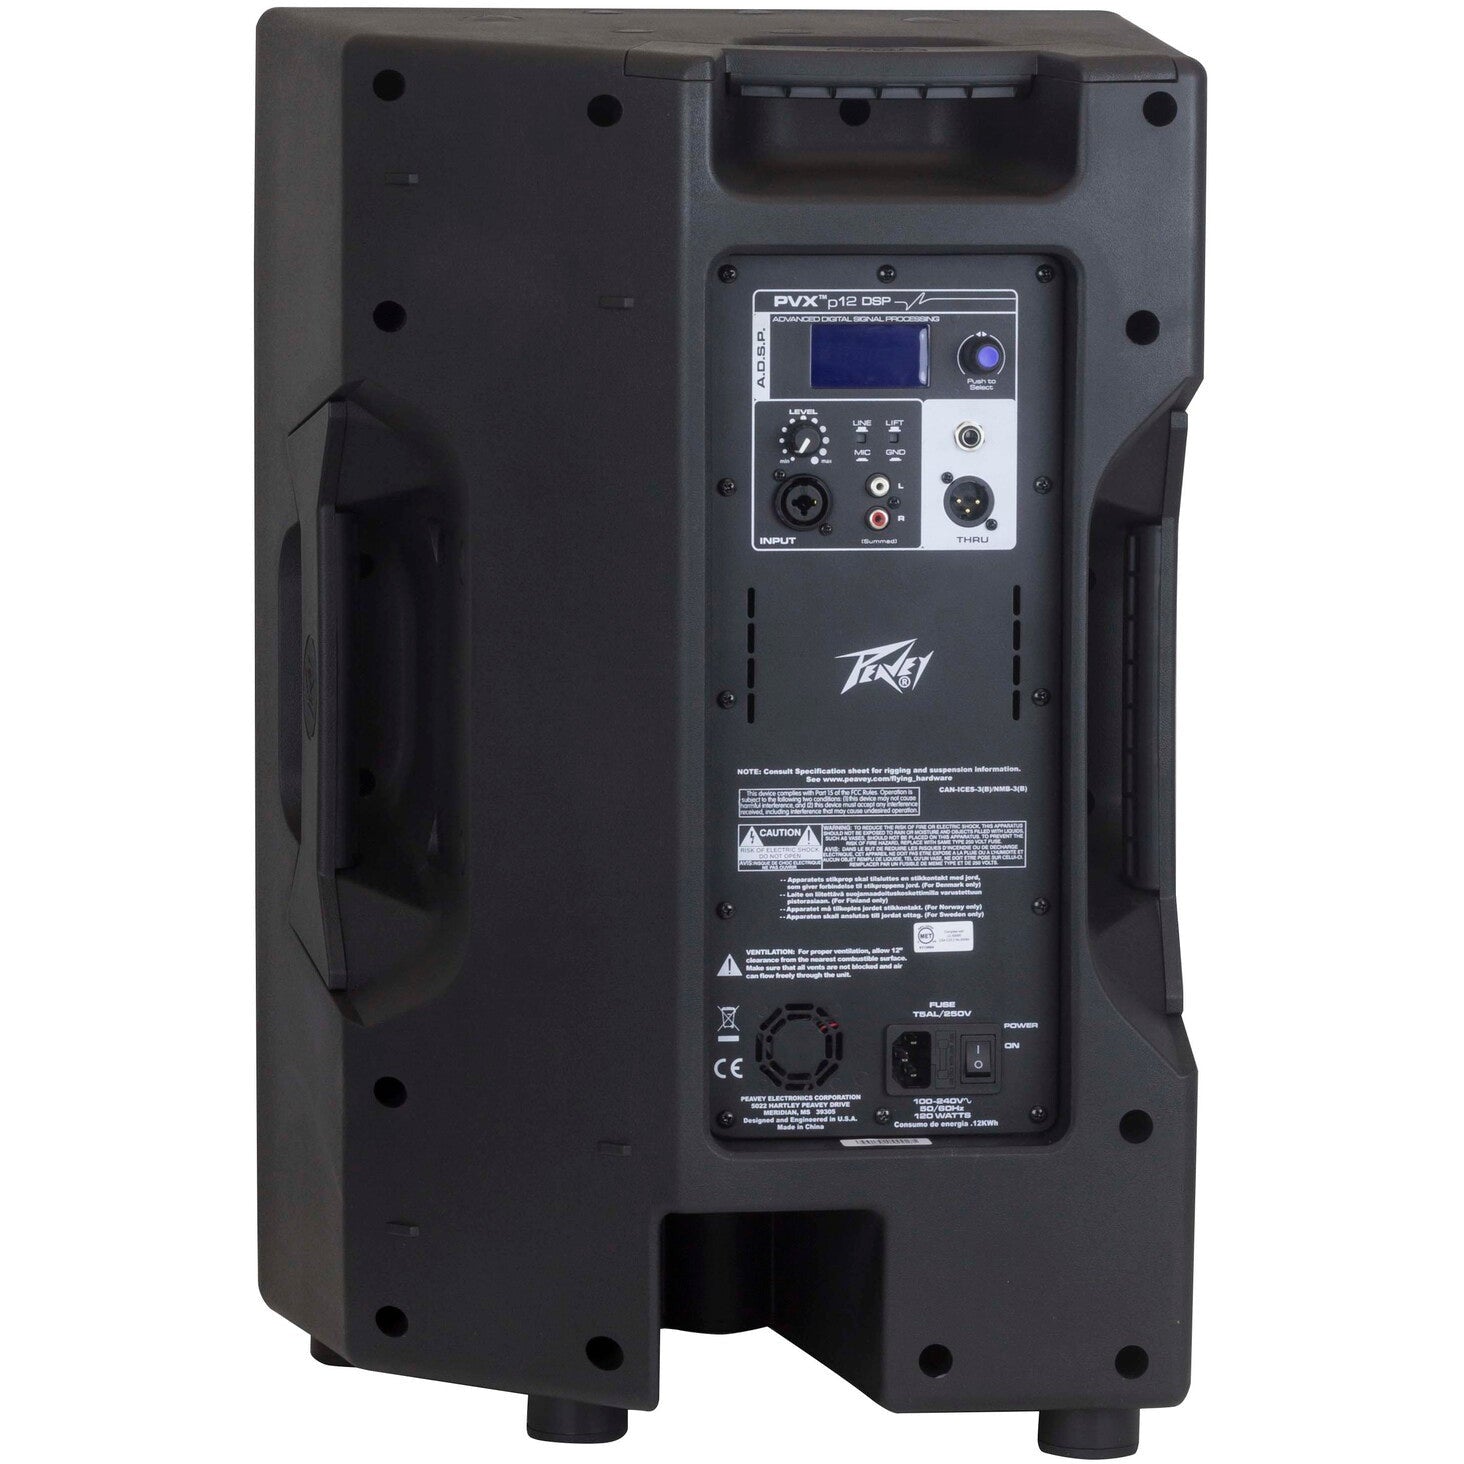 Peavey PVX Series "PVXp-12DSP" Powered 830W, Bi-Amped, 12" Loudspeaker with DSP